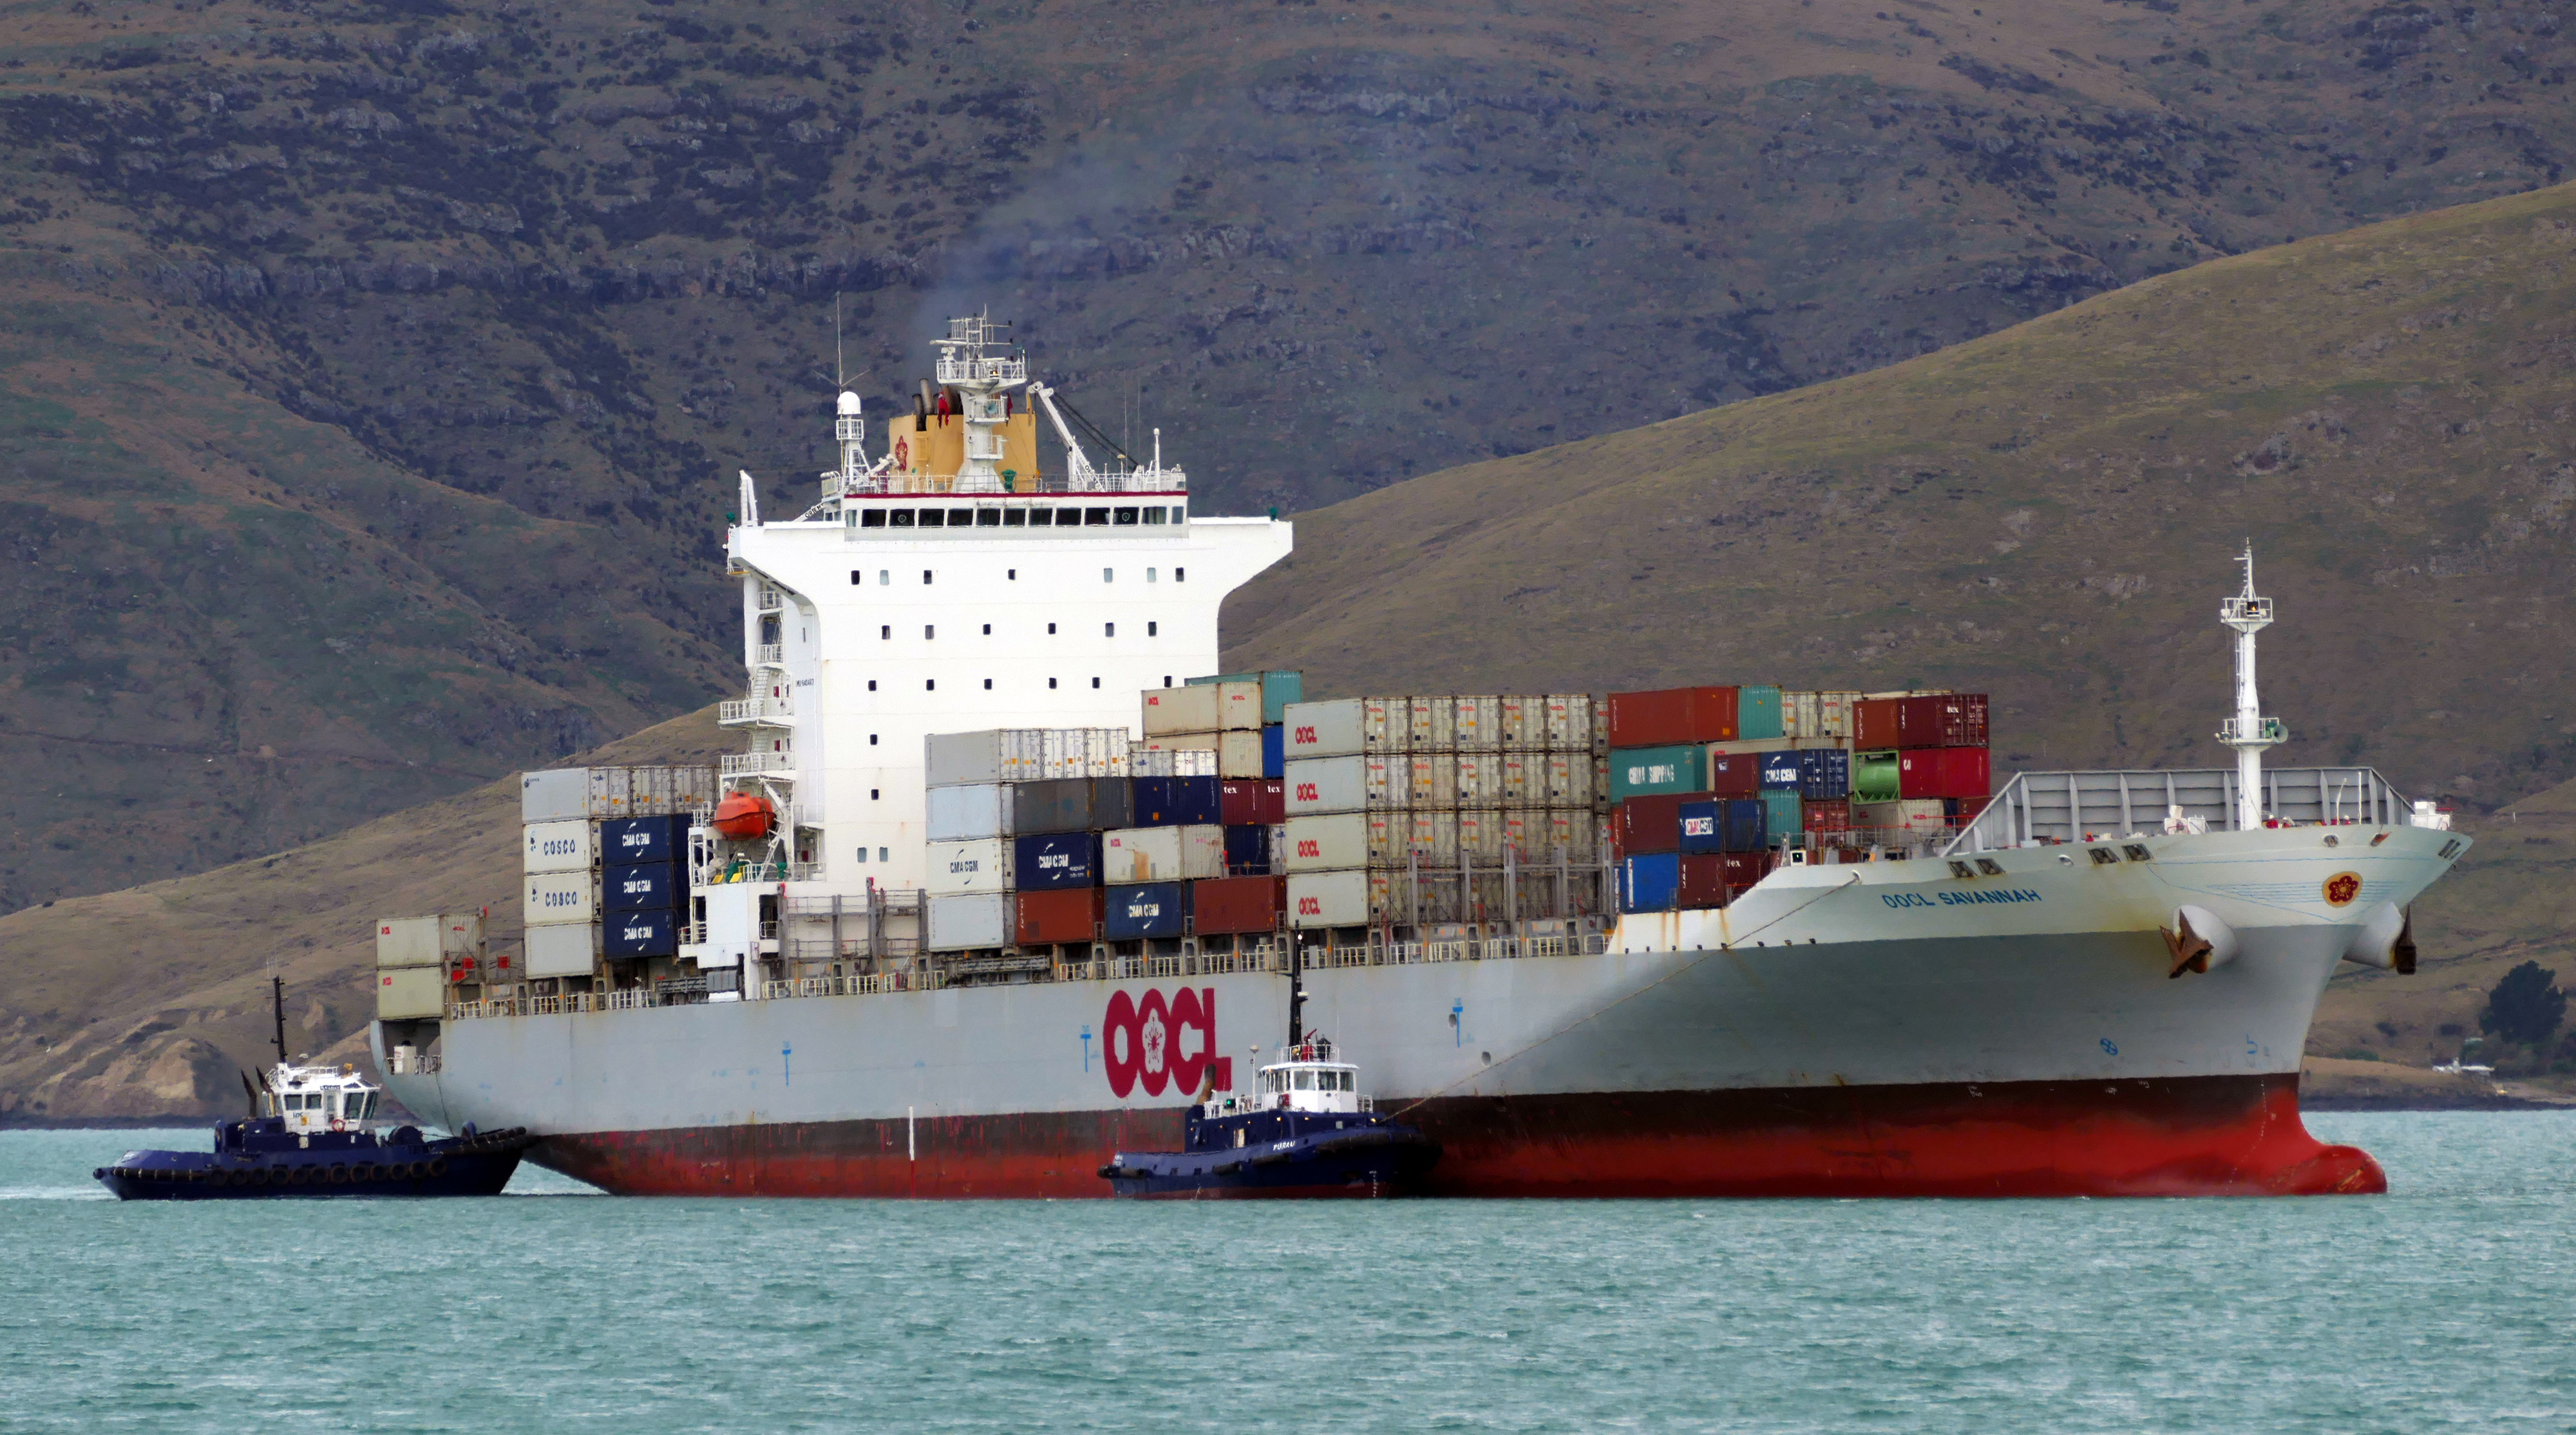 Oocl savannah (container ship) photo